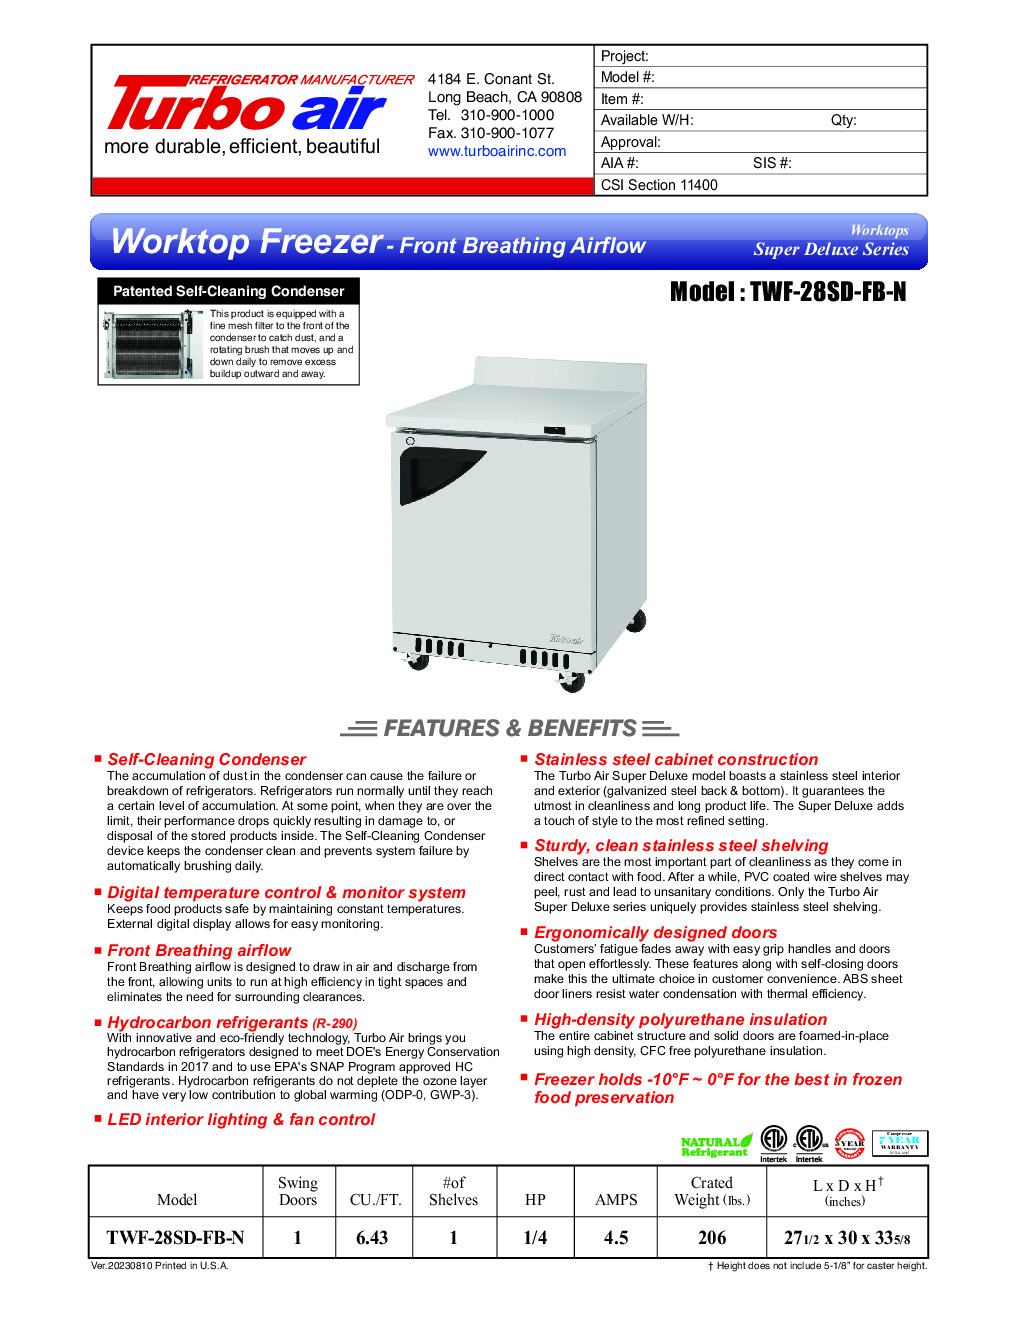 Turbo Air TWF-28SD-FB-N Work Top Freezer Counter